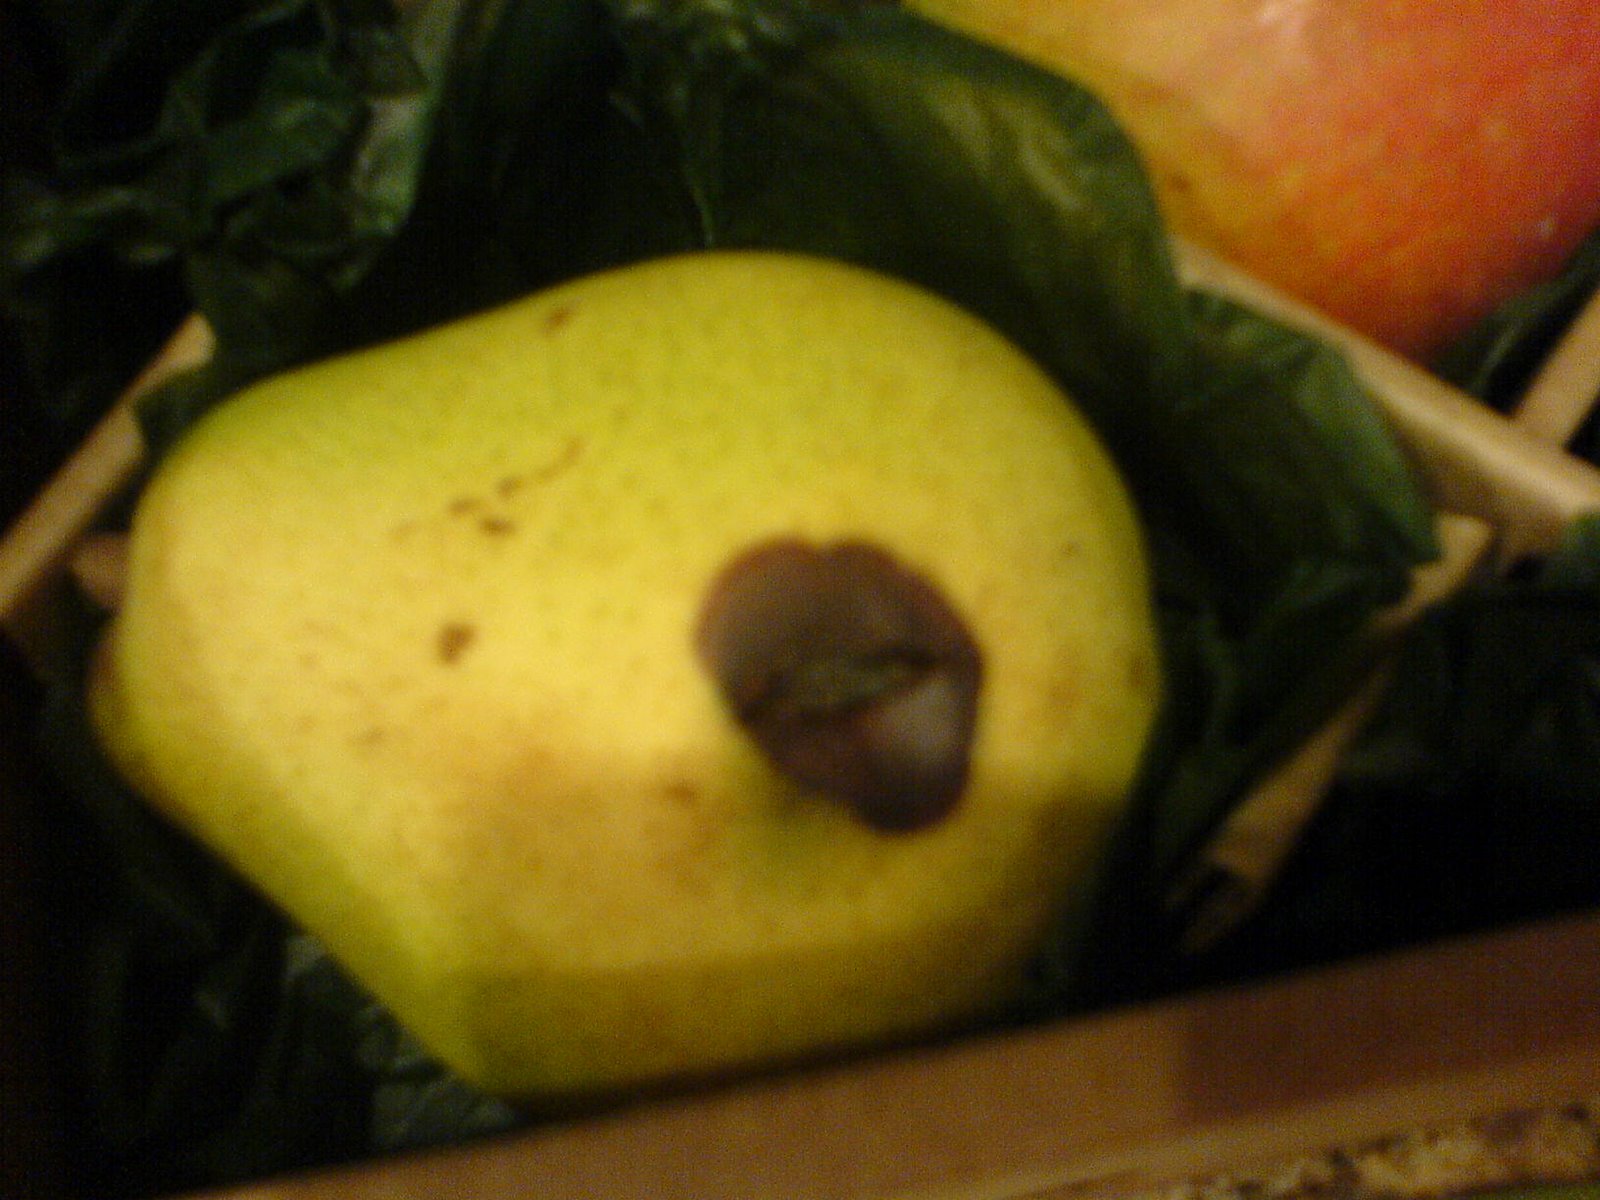 [pear.jpg]